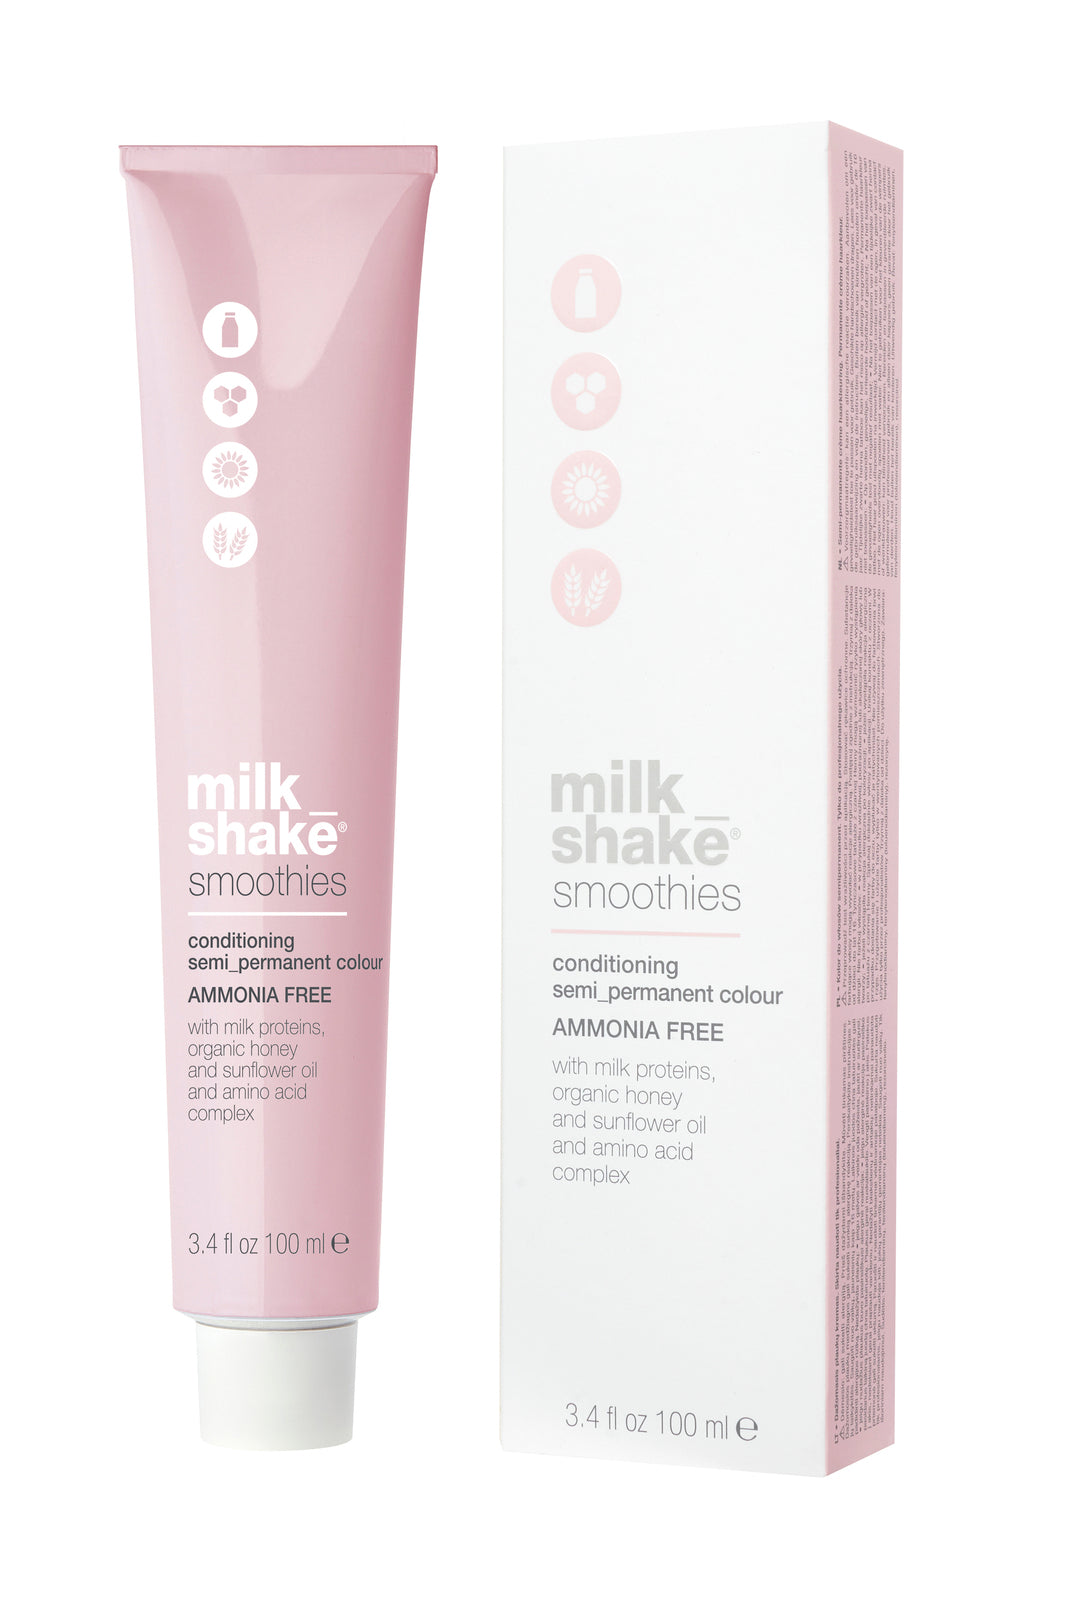 Milkshake smoothies semi-permanent color 7.13